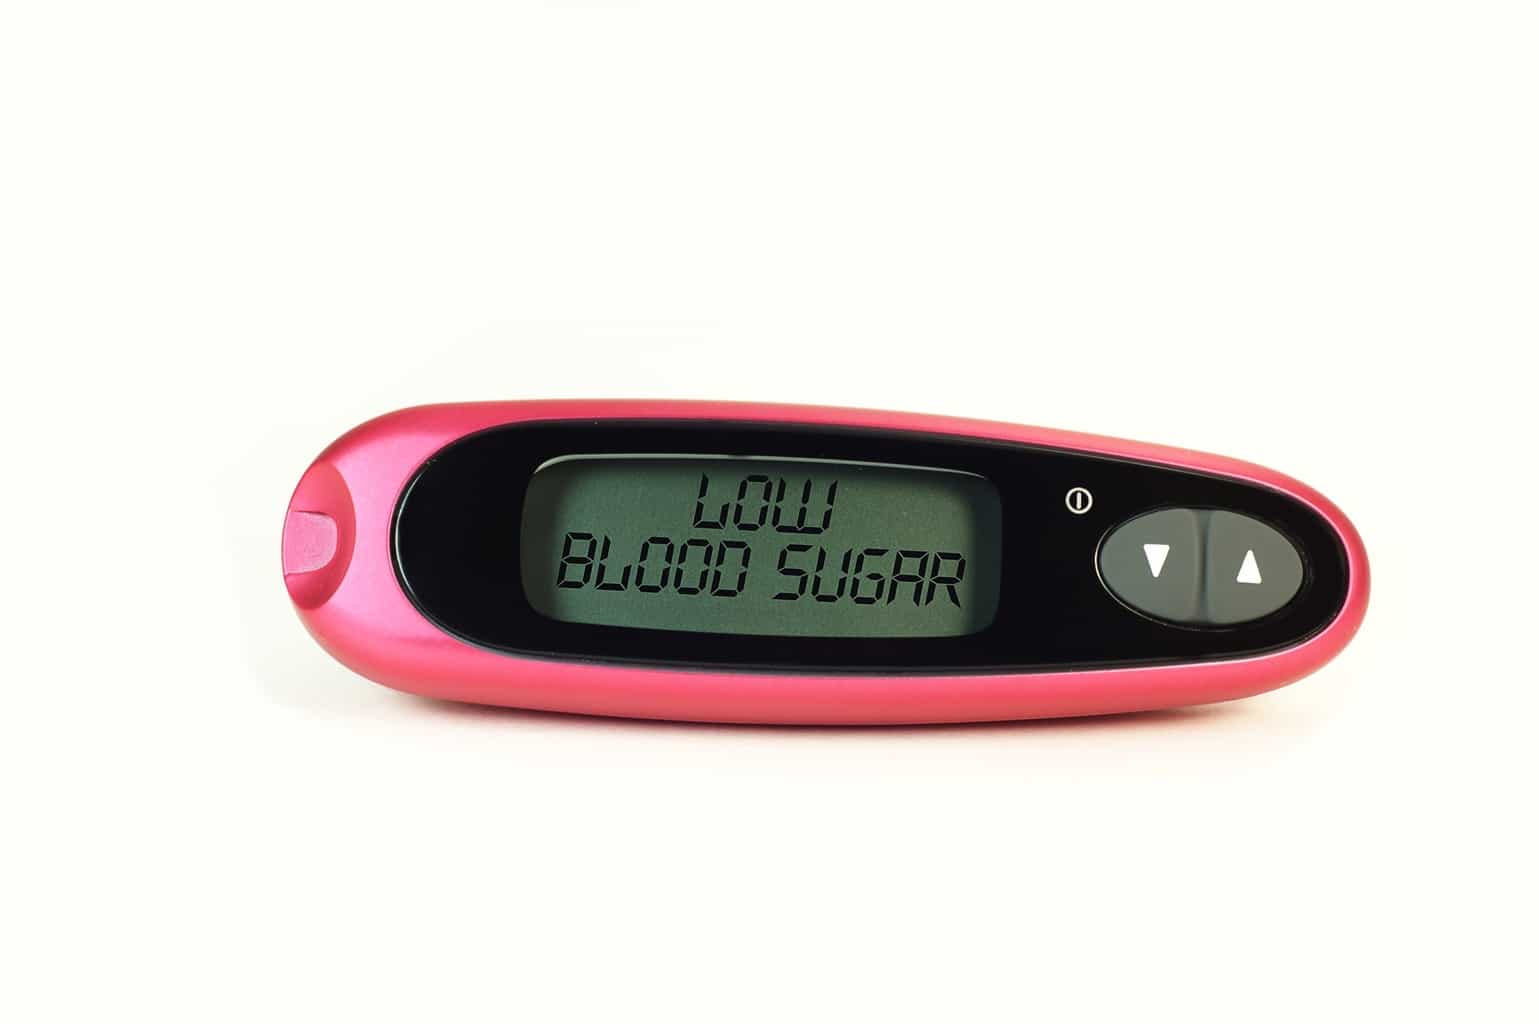 Lowering blood sugar doesn’t fix diabetes